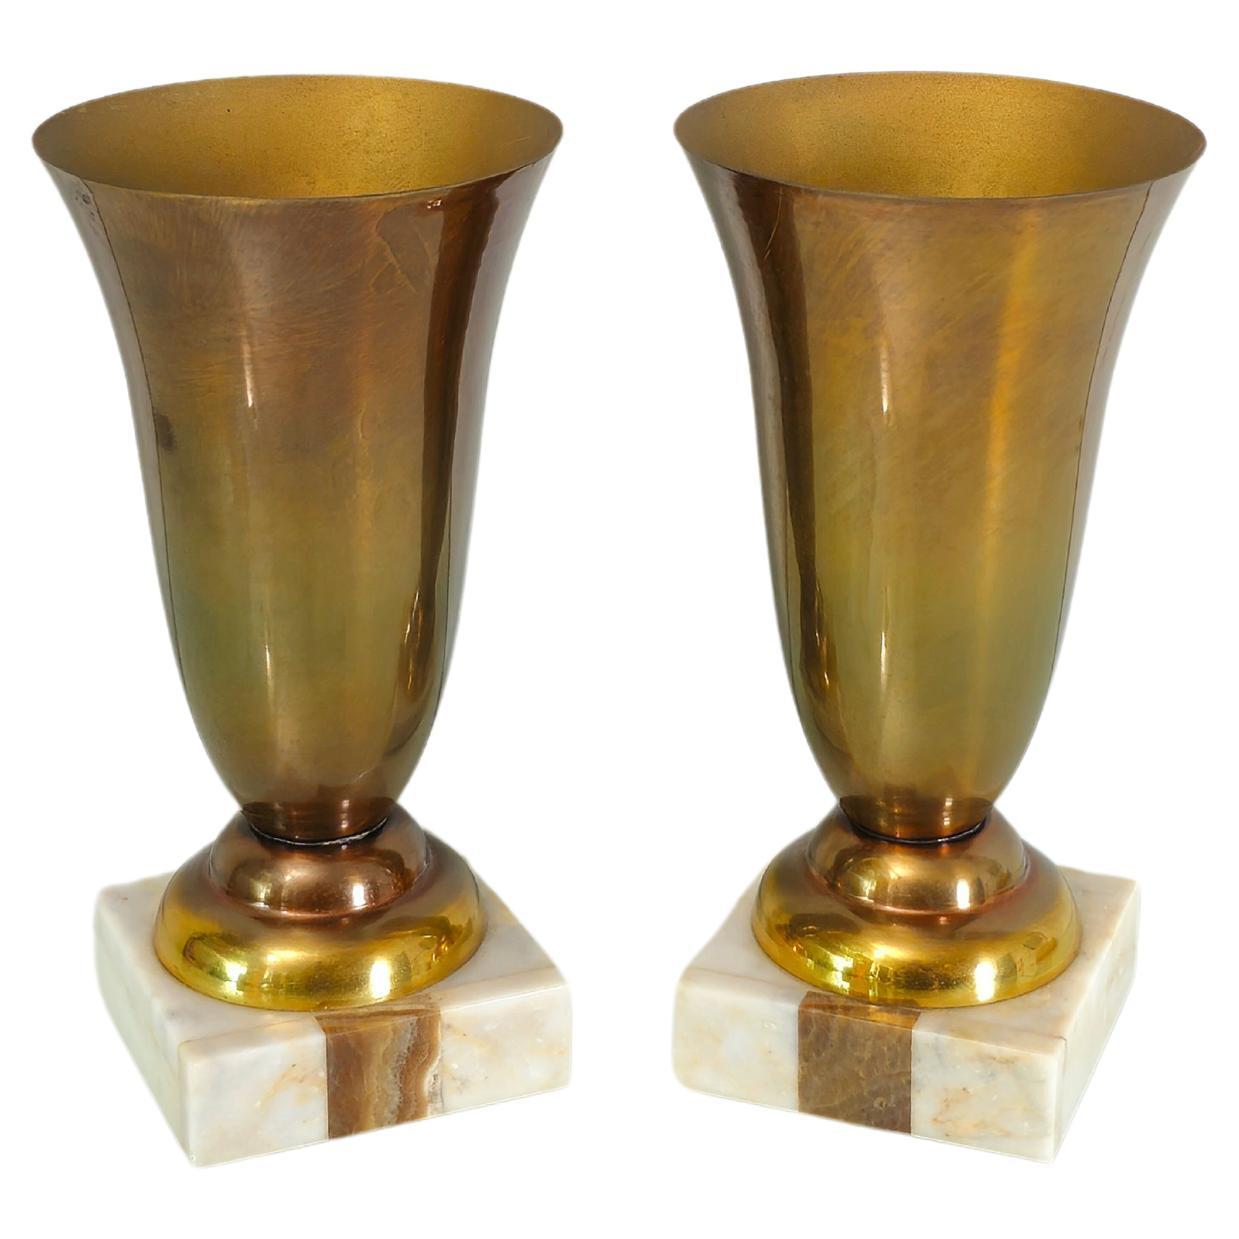 Decorative Objects Vases Aluminum Marble Midcentury Modern Italy 1960s Set of 2